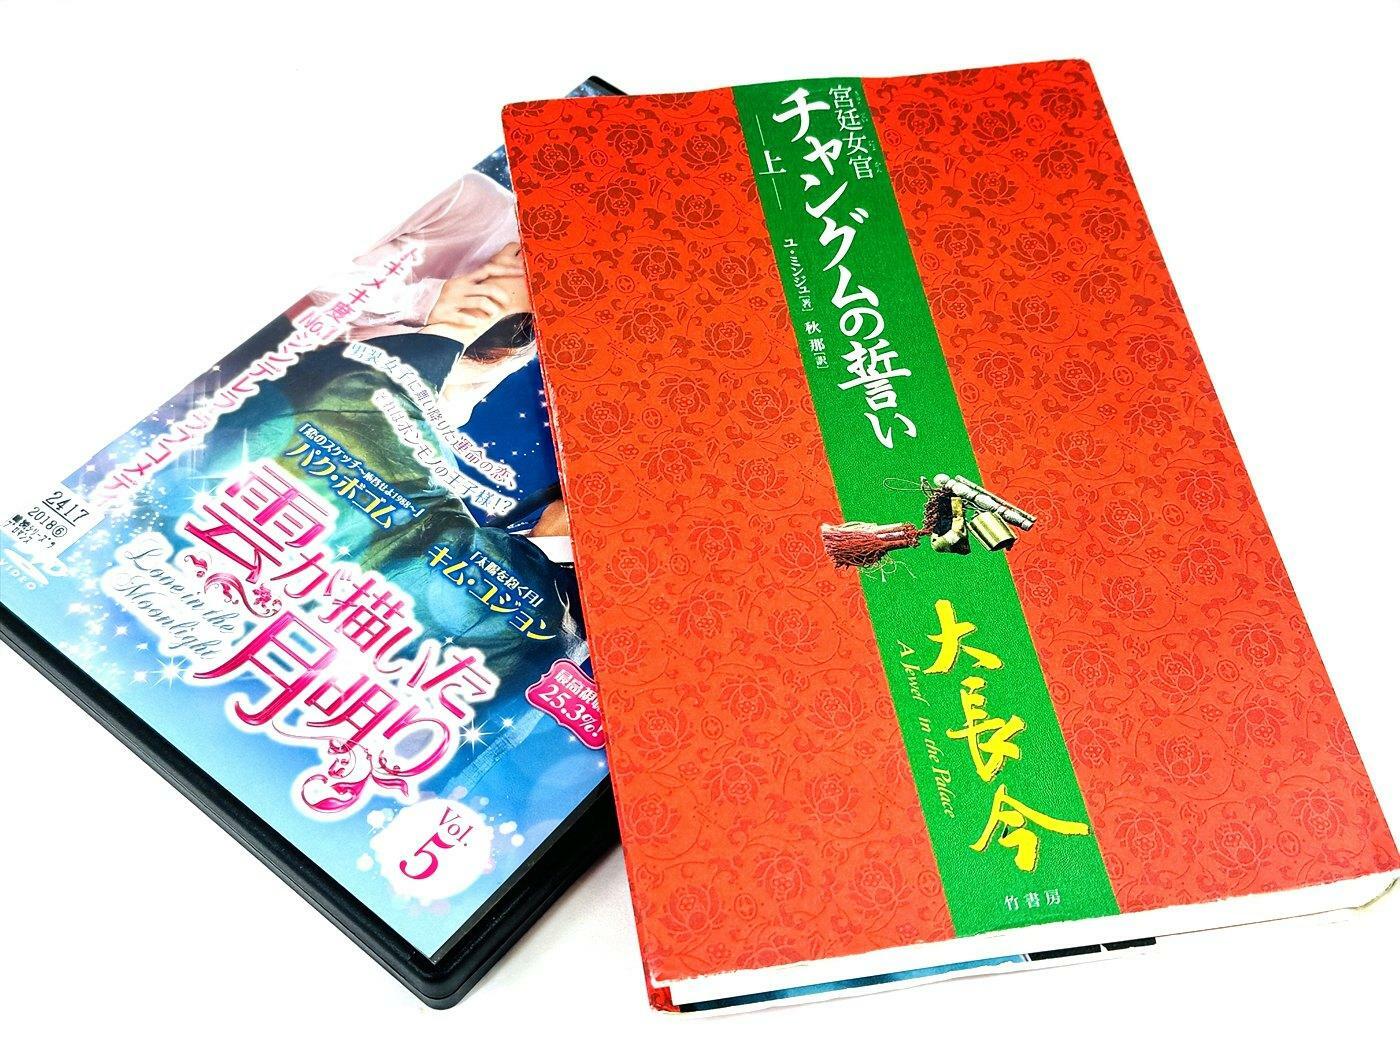 DVD「雲が描いた月明かり」と竹書房出版：単行本「宮廷女官チャングムの誓い」